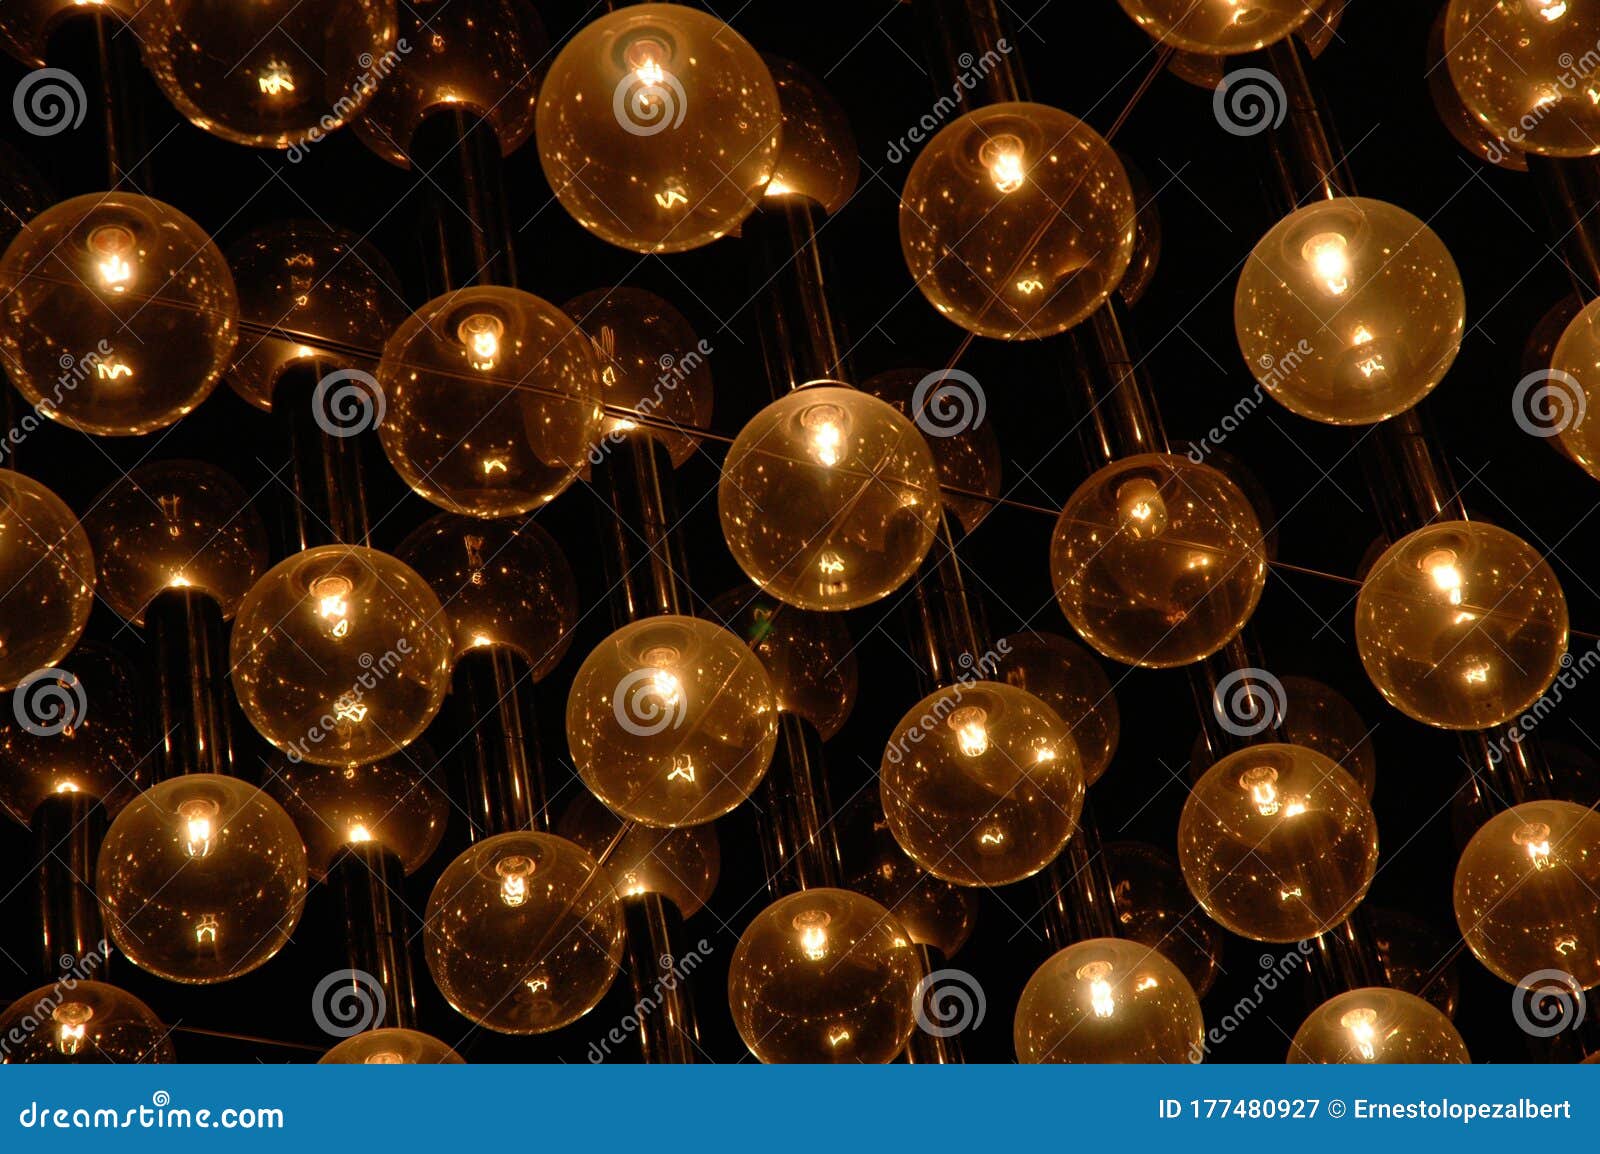 Decorative spherical bulbs stock image. Image of coarse - 177480927